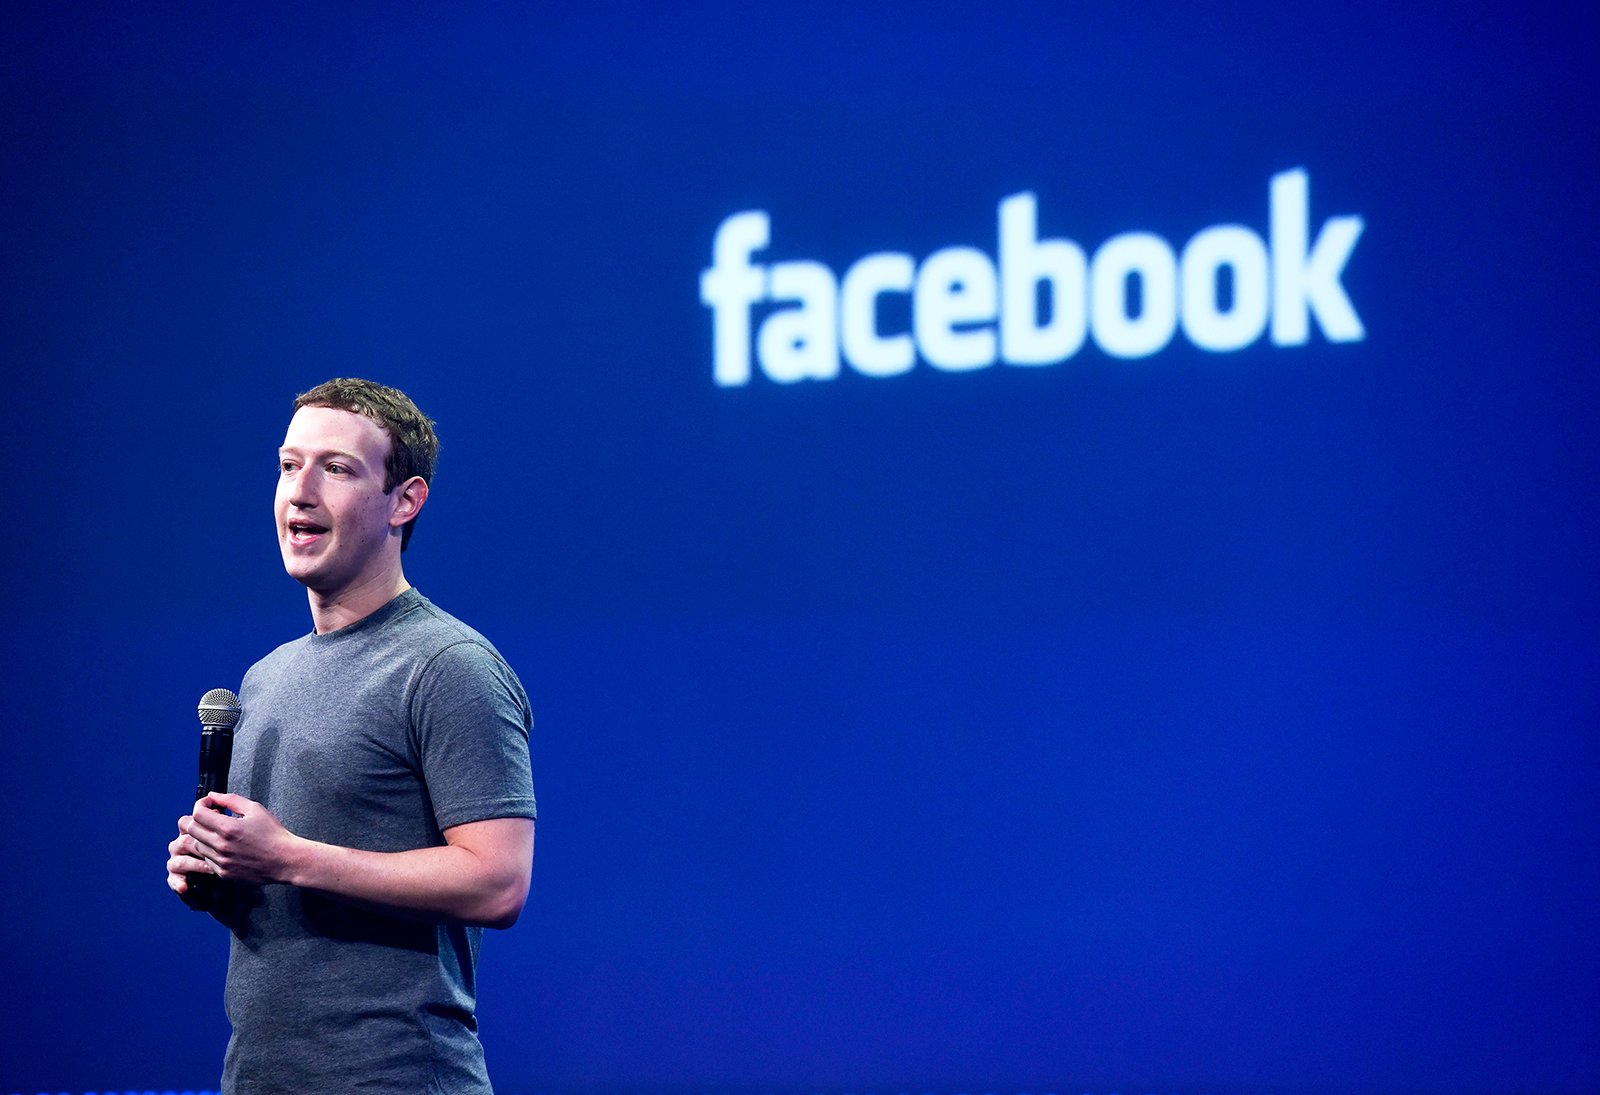 Mark Zuckerberg ประธานเจ้าหน้าที่บริหารของ Facebook Inc. กล่าวในระหว่างการประชุม Facebook F8 Developers Conference ที่ซานฟรานซิสโก แคลิฟอร์เนีย สหรัฐอเมริกา เมื่อวันพุธที่ 25 มีนาคม 2015 Zuckerberg วางแผนที่จะเปิดตัวเครื่องมือที่ช่วยให้ผู้ผลิตแอพพลิเคชั่นเข้าถึงกลุ่มเป้าหมายของโซเชียลเน็ตเวิร์กไปพร้อมๆ กับการช่วยเหลือ บริษัทเพิ่มรายได้ ช่างภาพ: David Paul Morris / Bloomberg ผ่าน Getty Images